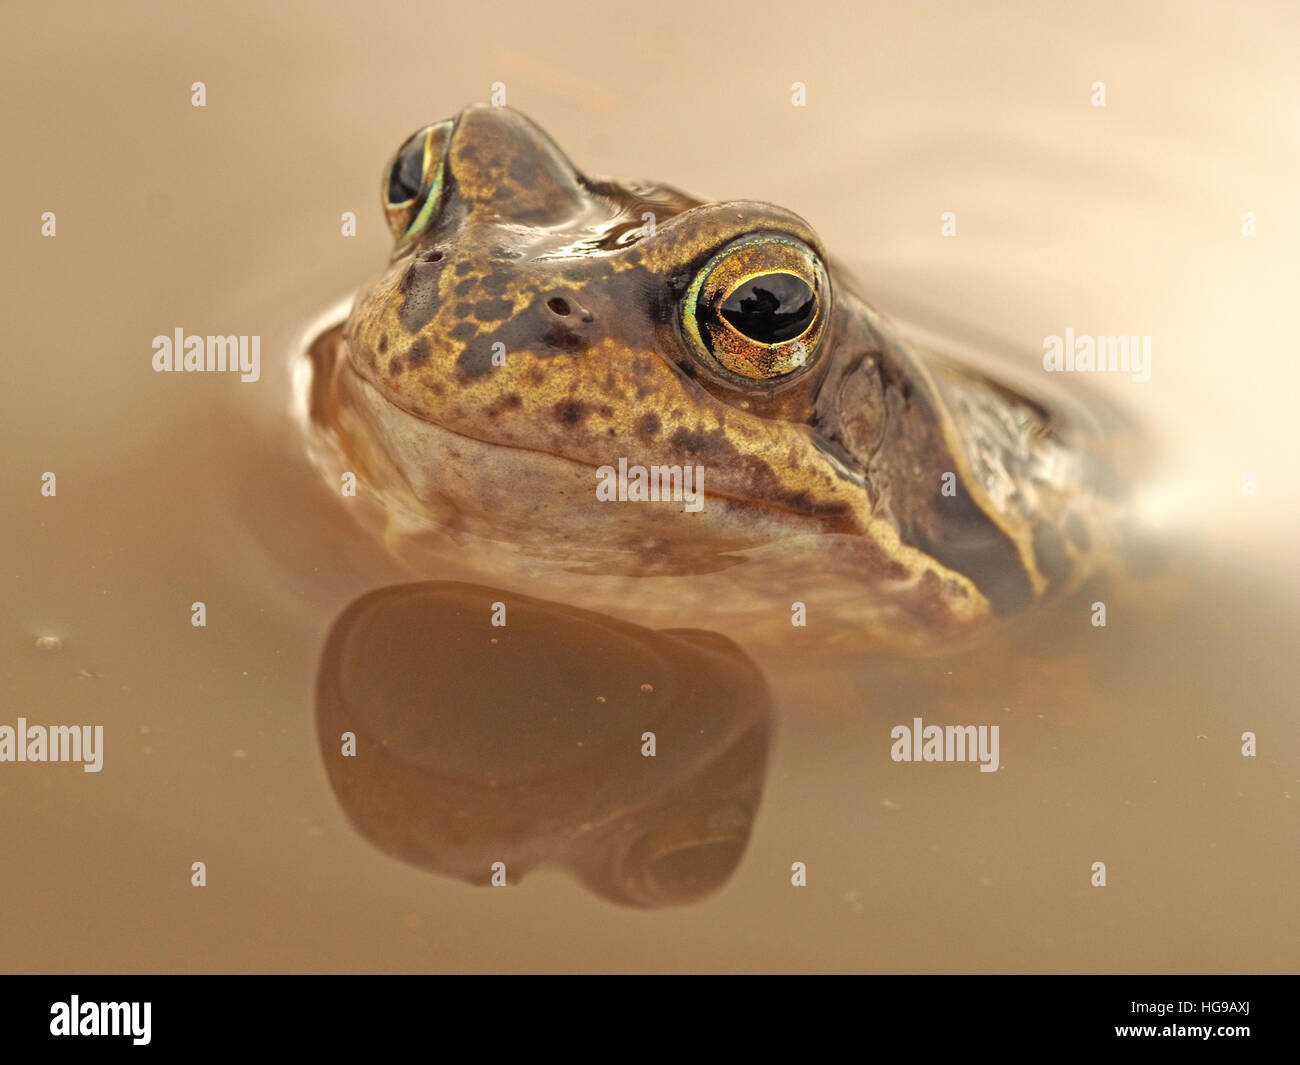 Common Frog (Rana temporaria) European common frog/ European common brown frog/ European grass frog & reflection in muddy pool Stock Photo